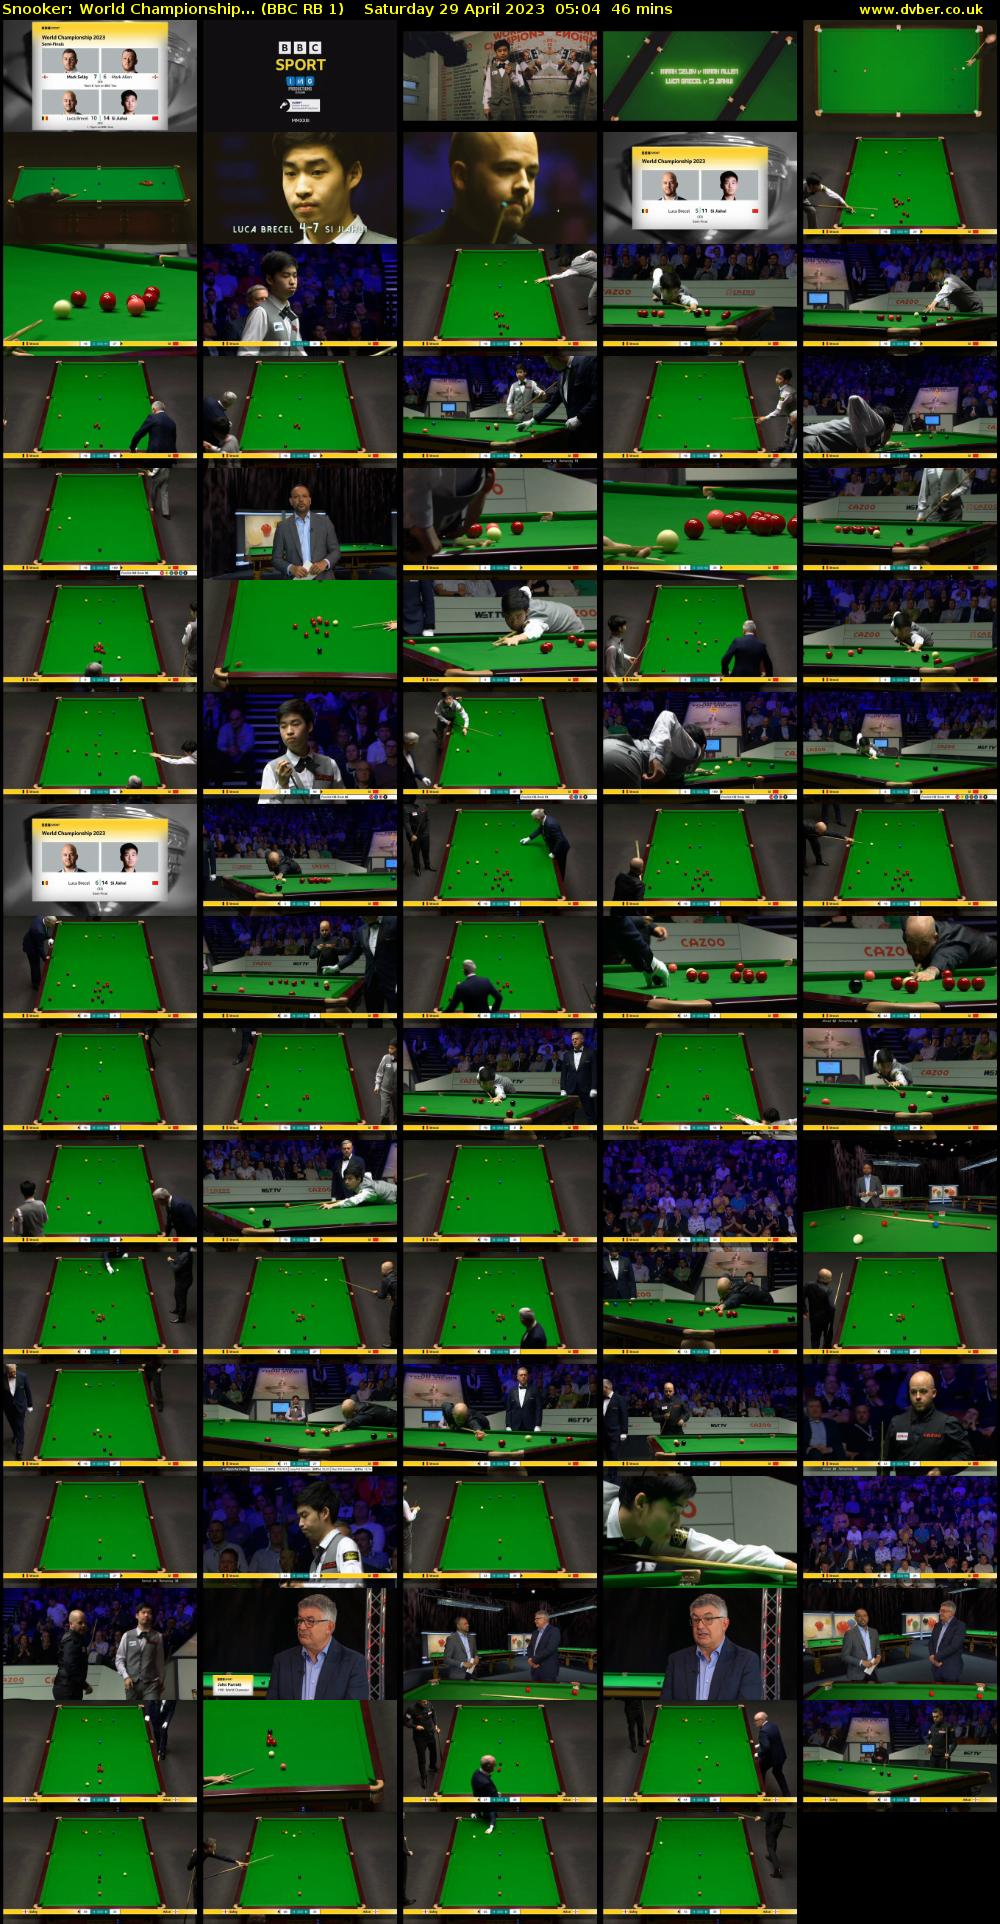 Snooker: World Championship... (BBC RB 1) Saturday 29 April 2023 05:04 - 05:50